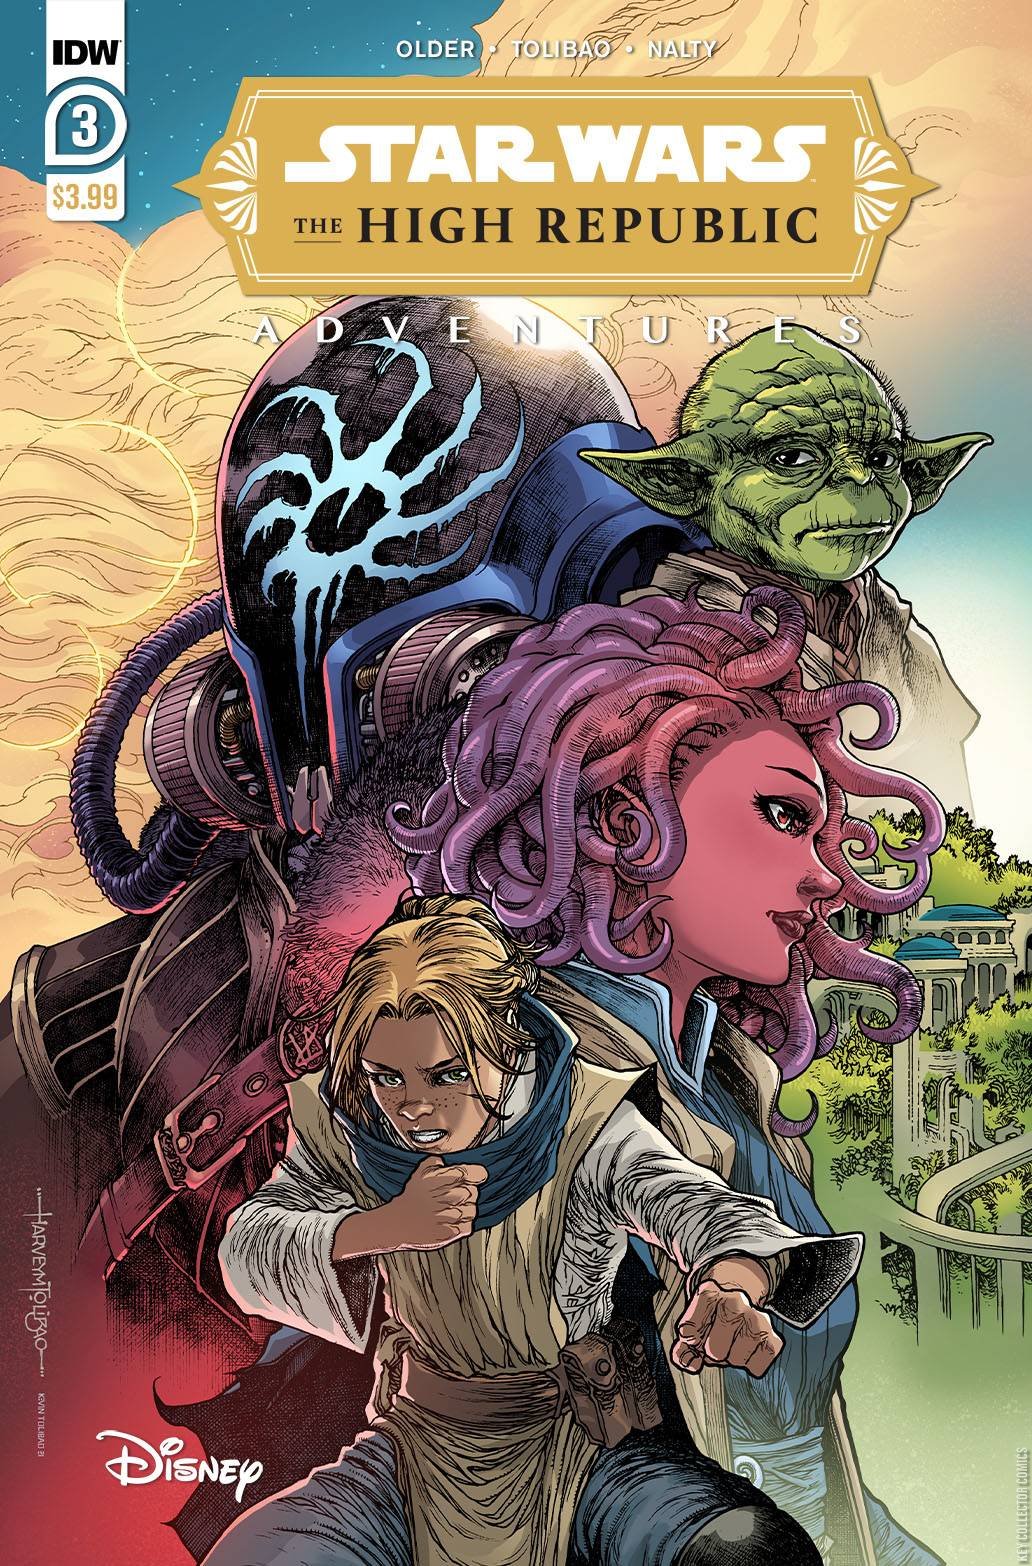 Key Collector Comics - Star Wars: The High Republic Adventures